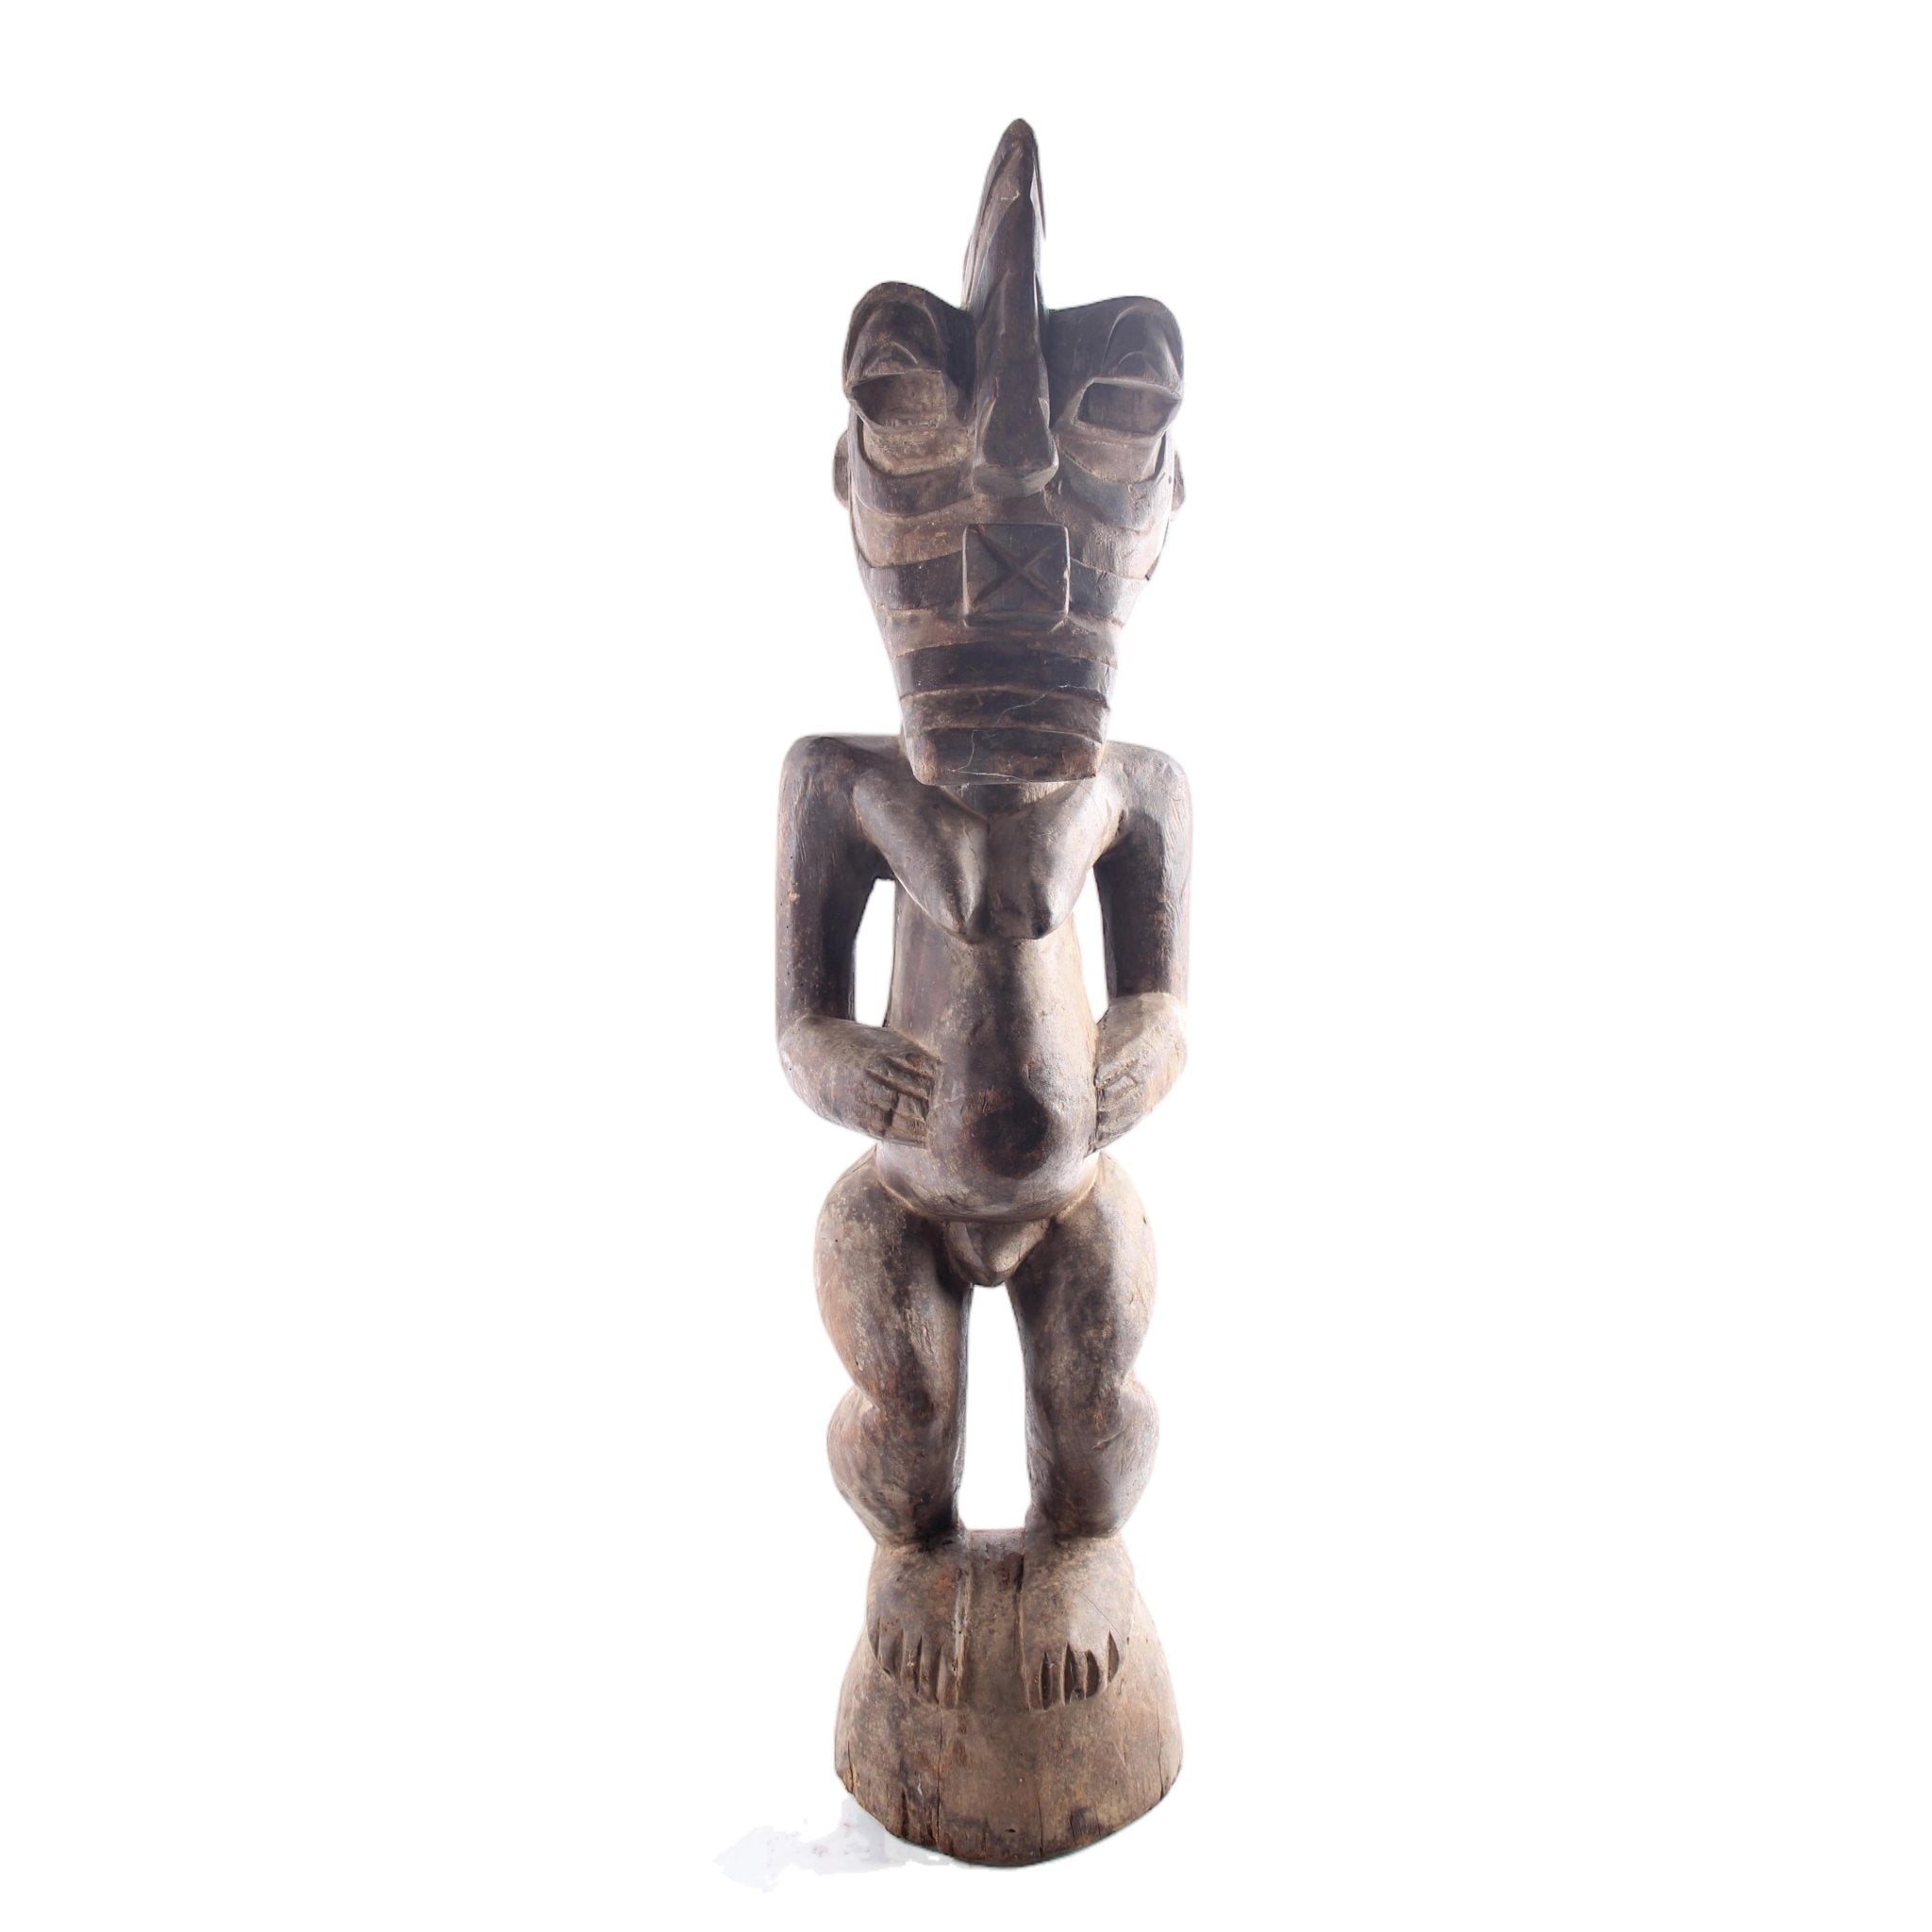 Basonge/Songye Tribe Figurine ~28.0" Tall - African Angel Art